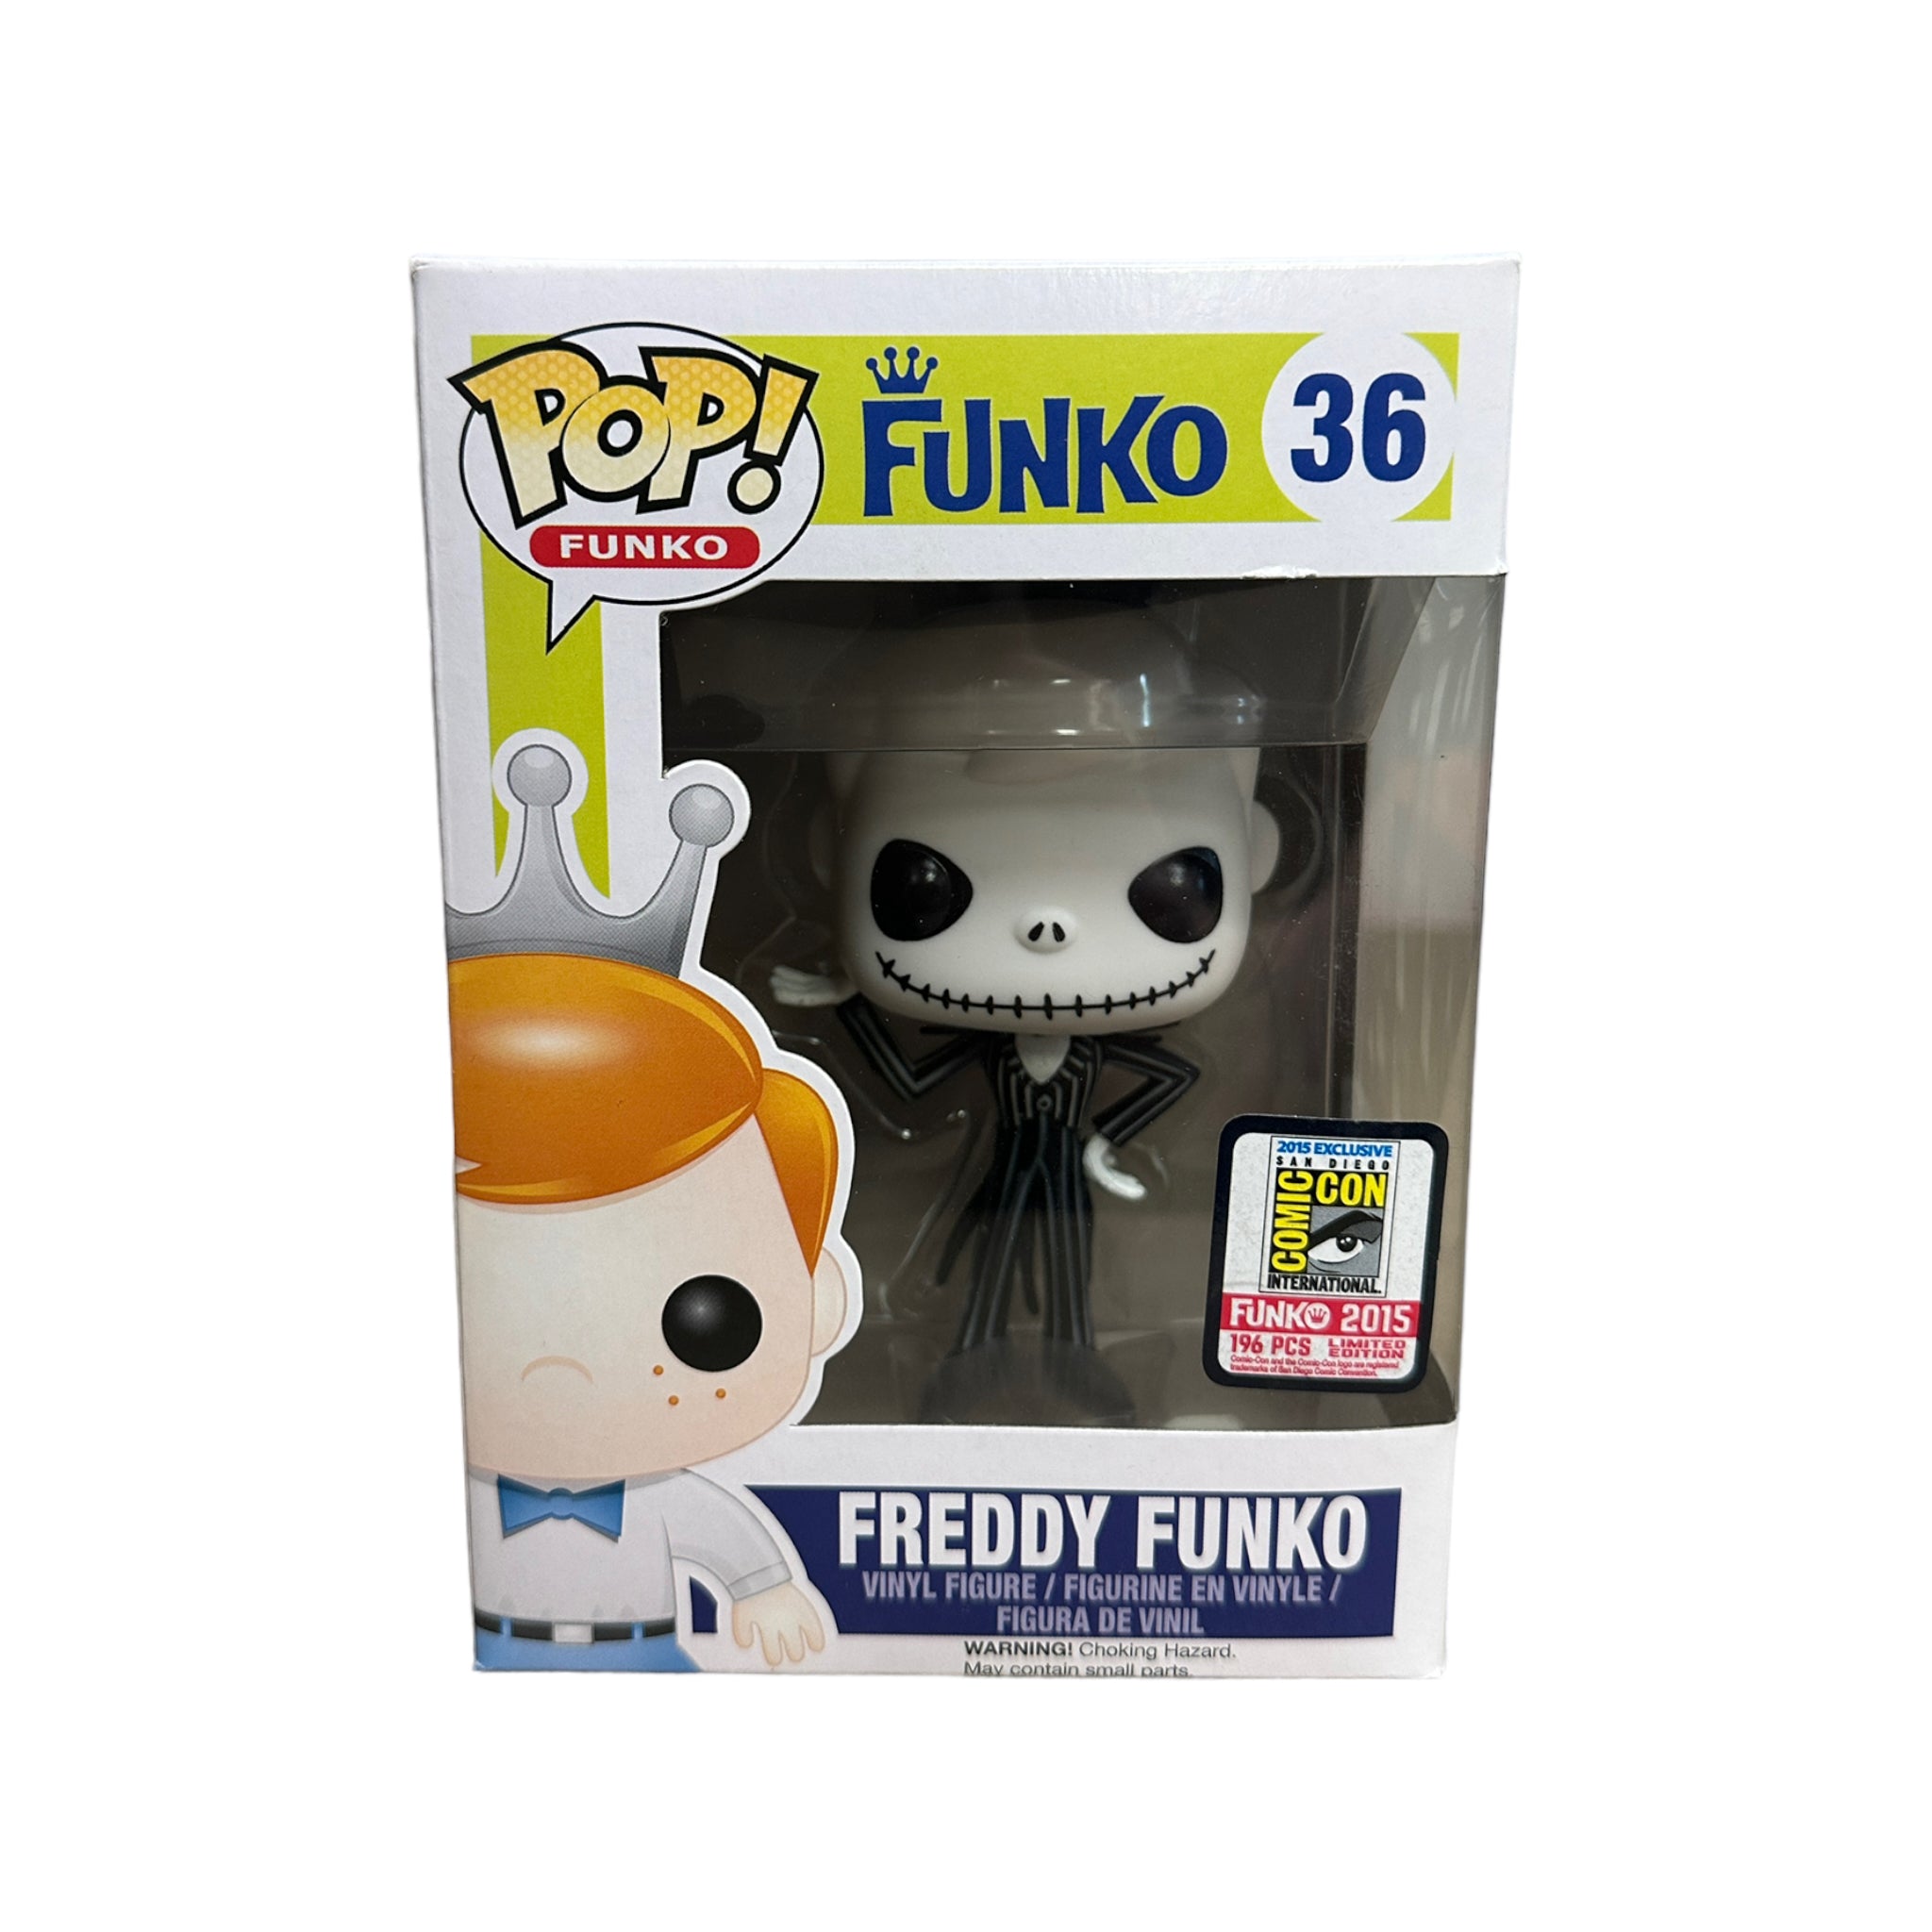 Freddy Funko as Jack Skellington #36 Funko Pop! - SDCC 2015 Exclusive LE196 Pcs - Condition 7.5/10